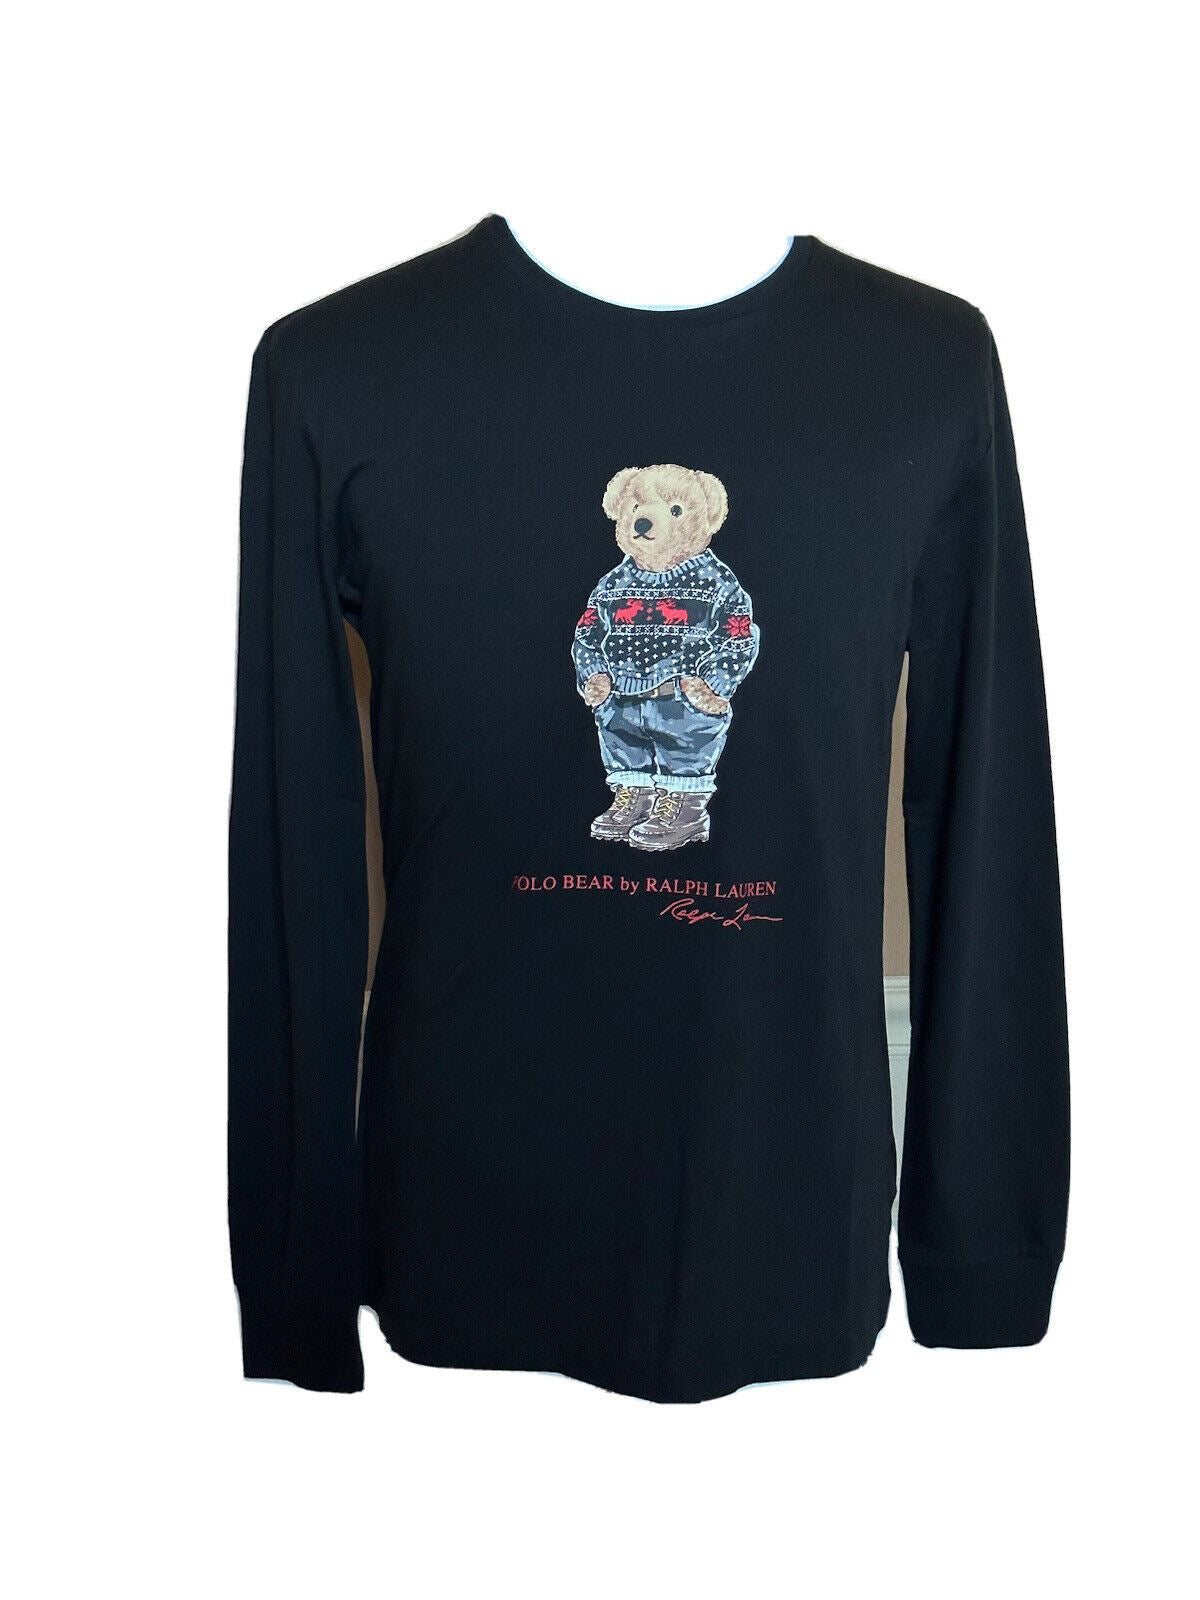 NWT $79,50 Polo Ralph Lauren футболка с медведем с длинными рукавами, черная, XL 